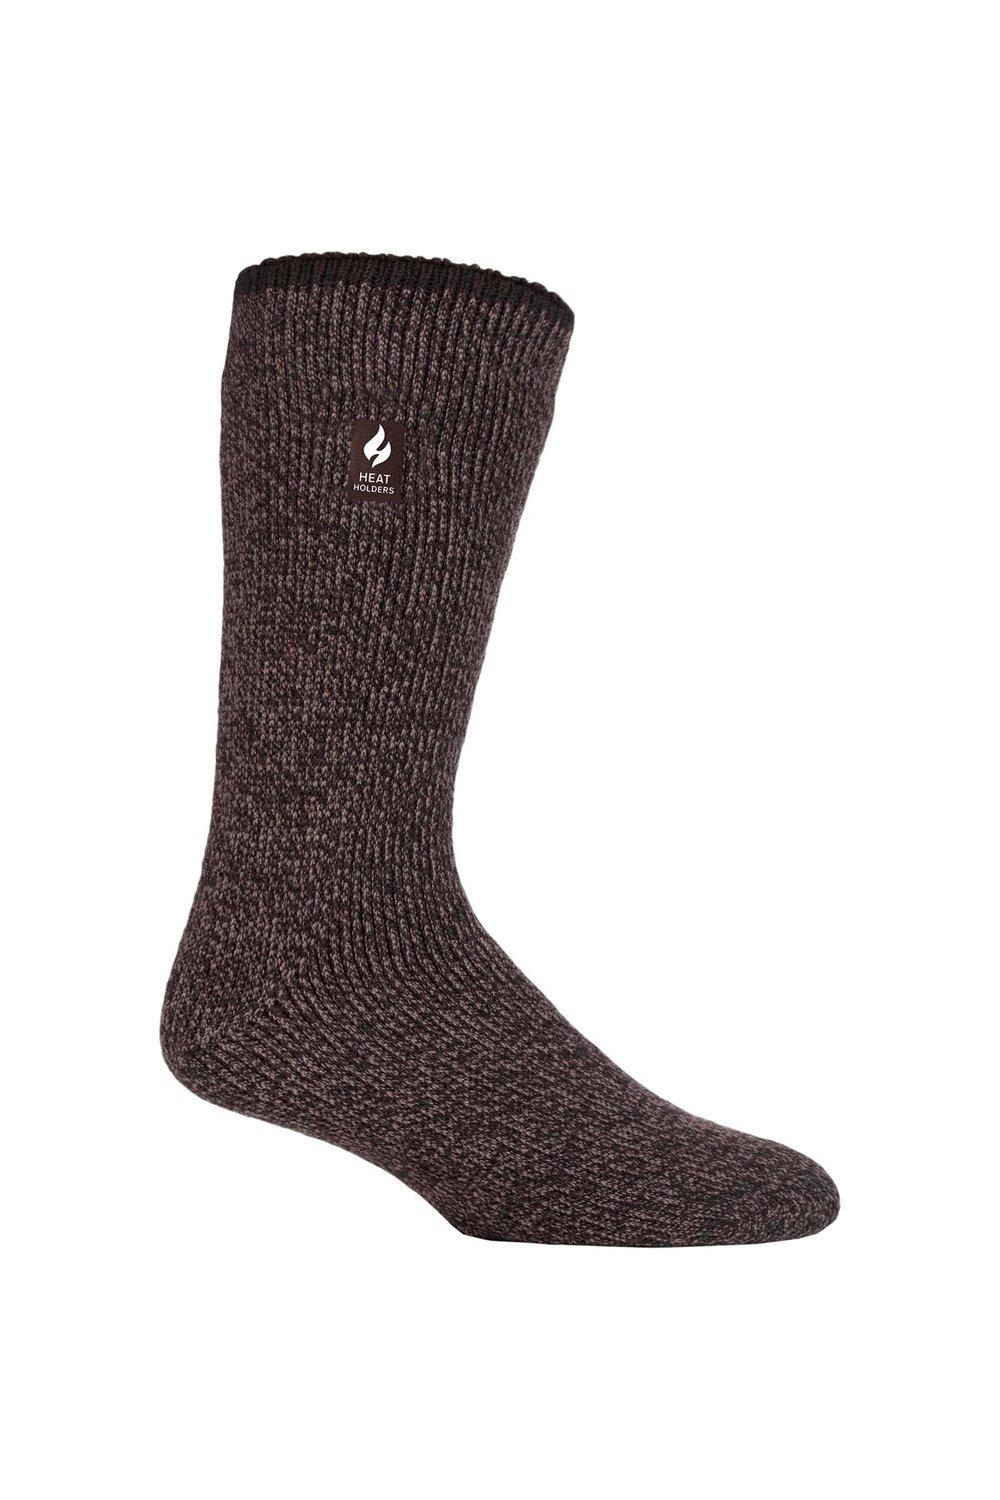 1 Pair 2.9 TOG Merino Wool Socks